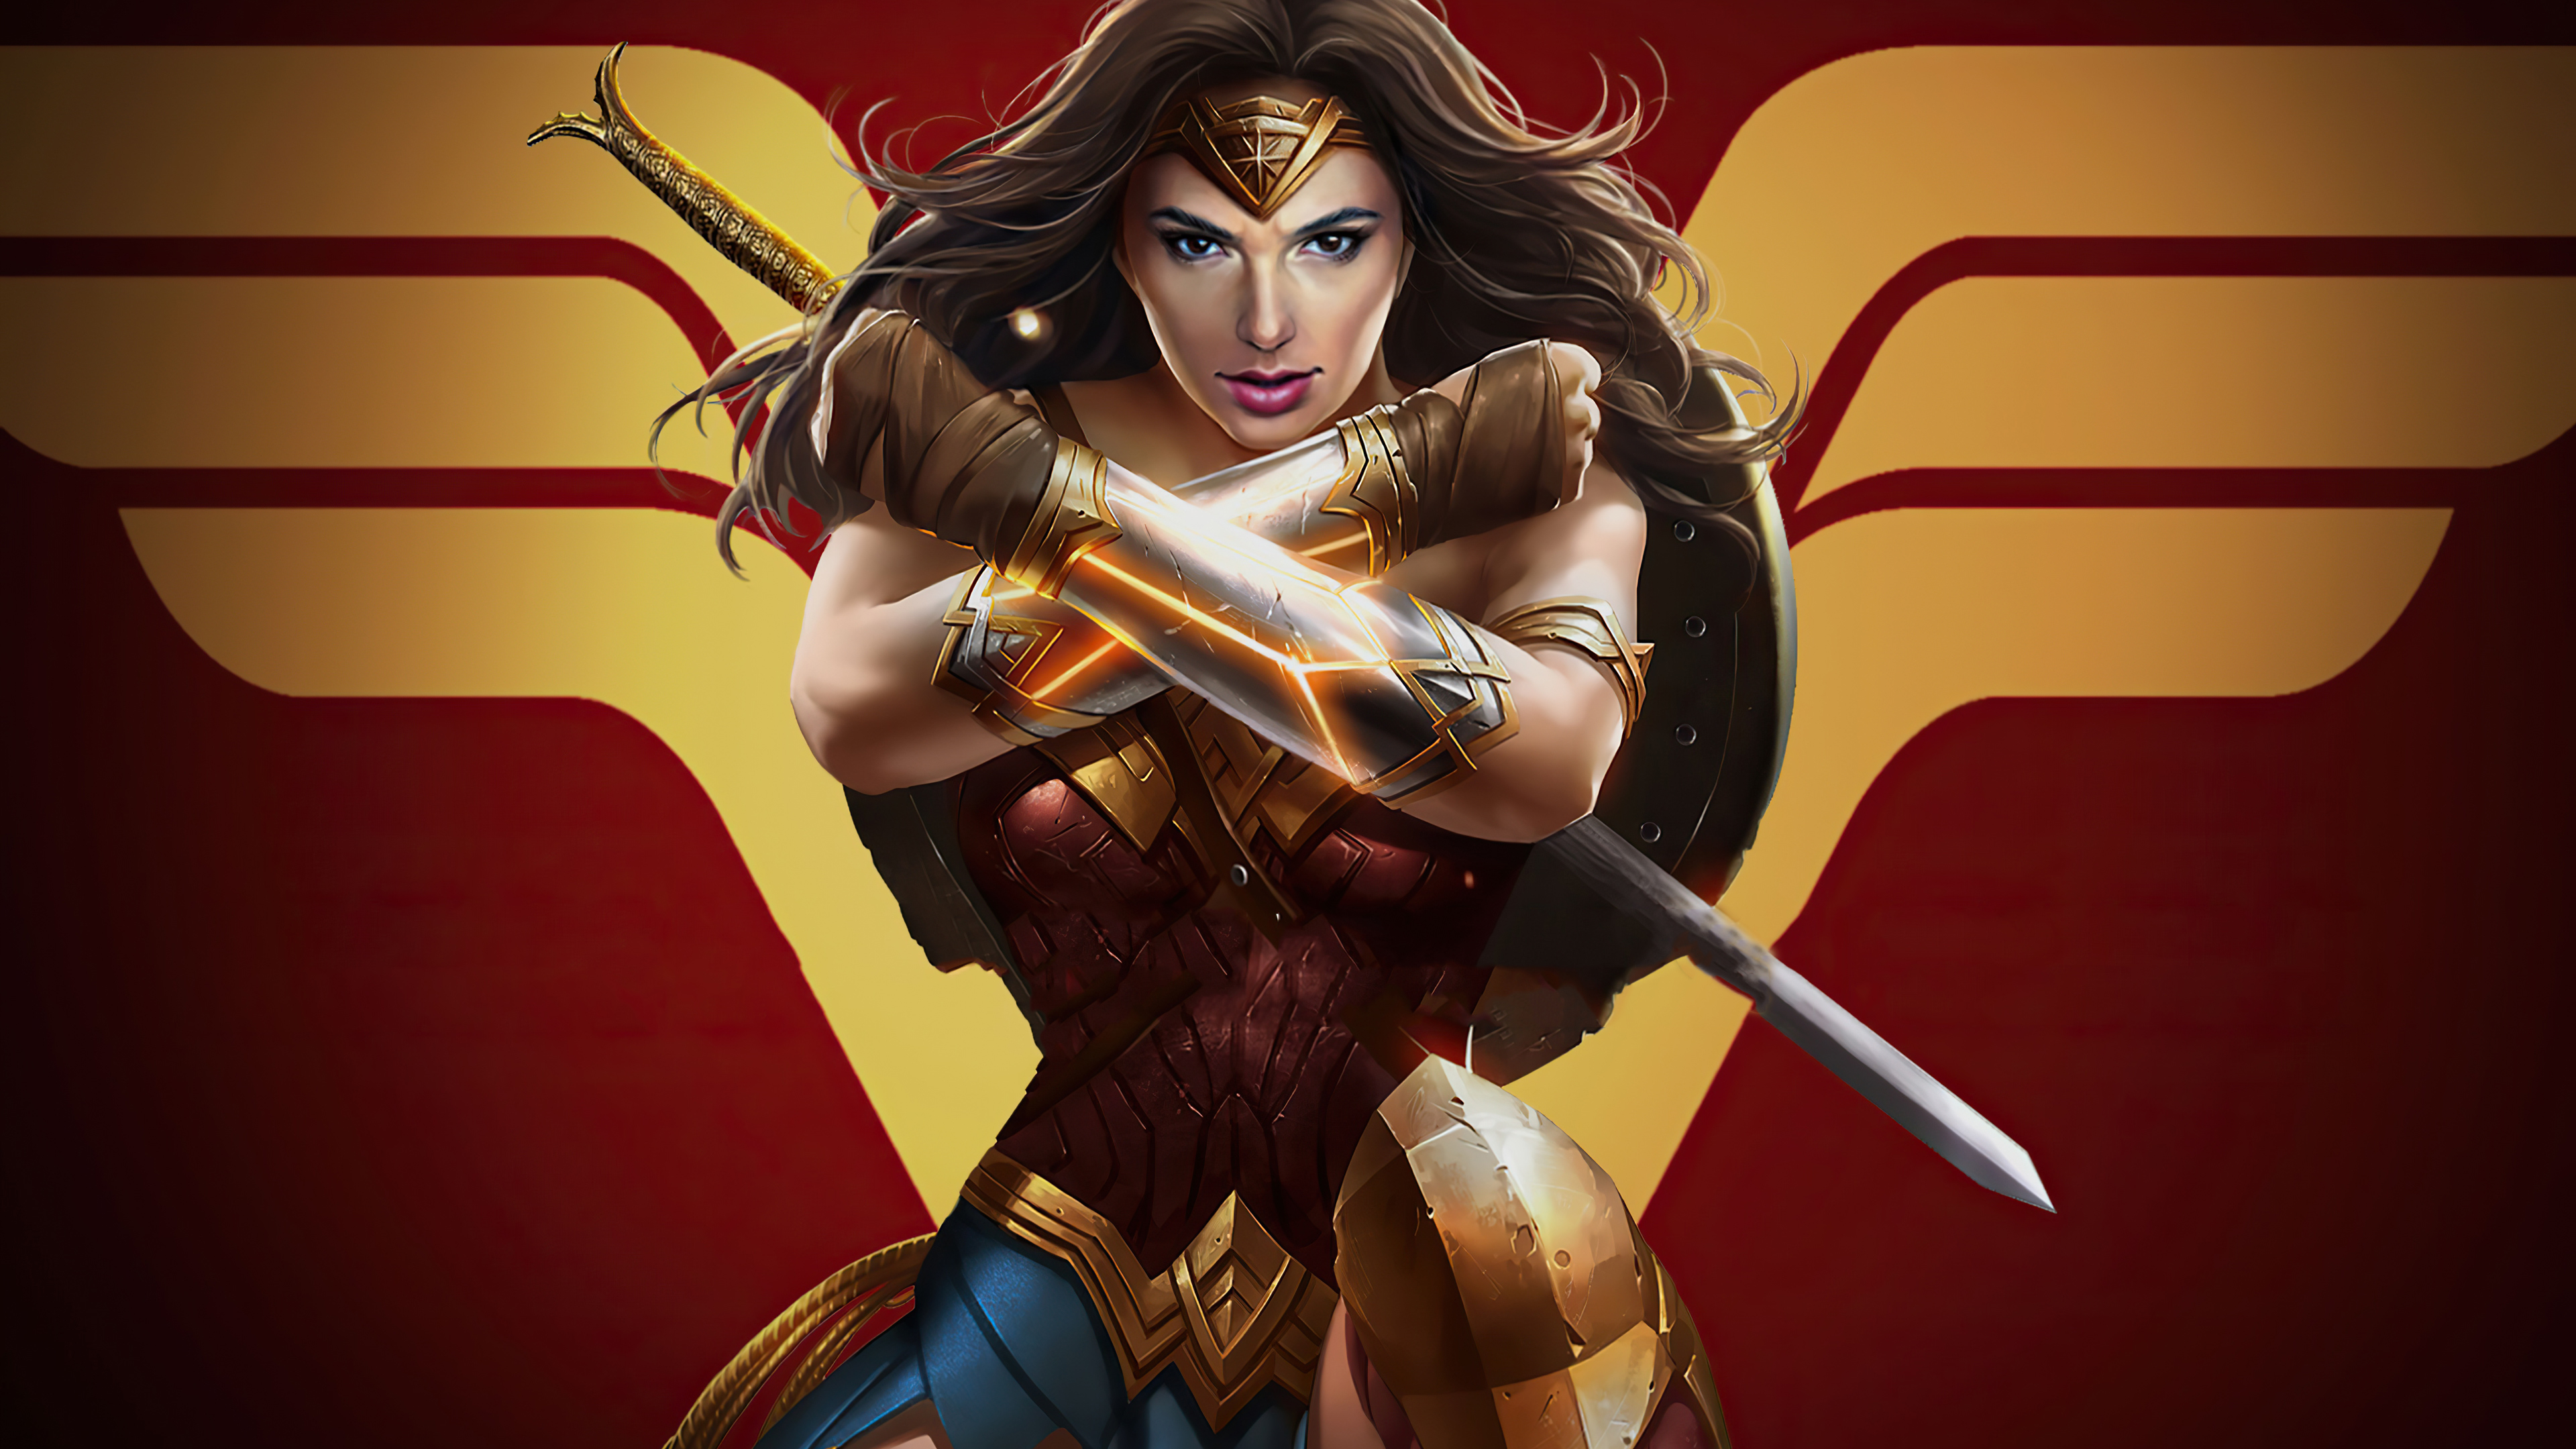 Wonder woman - comics style.jpg